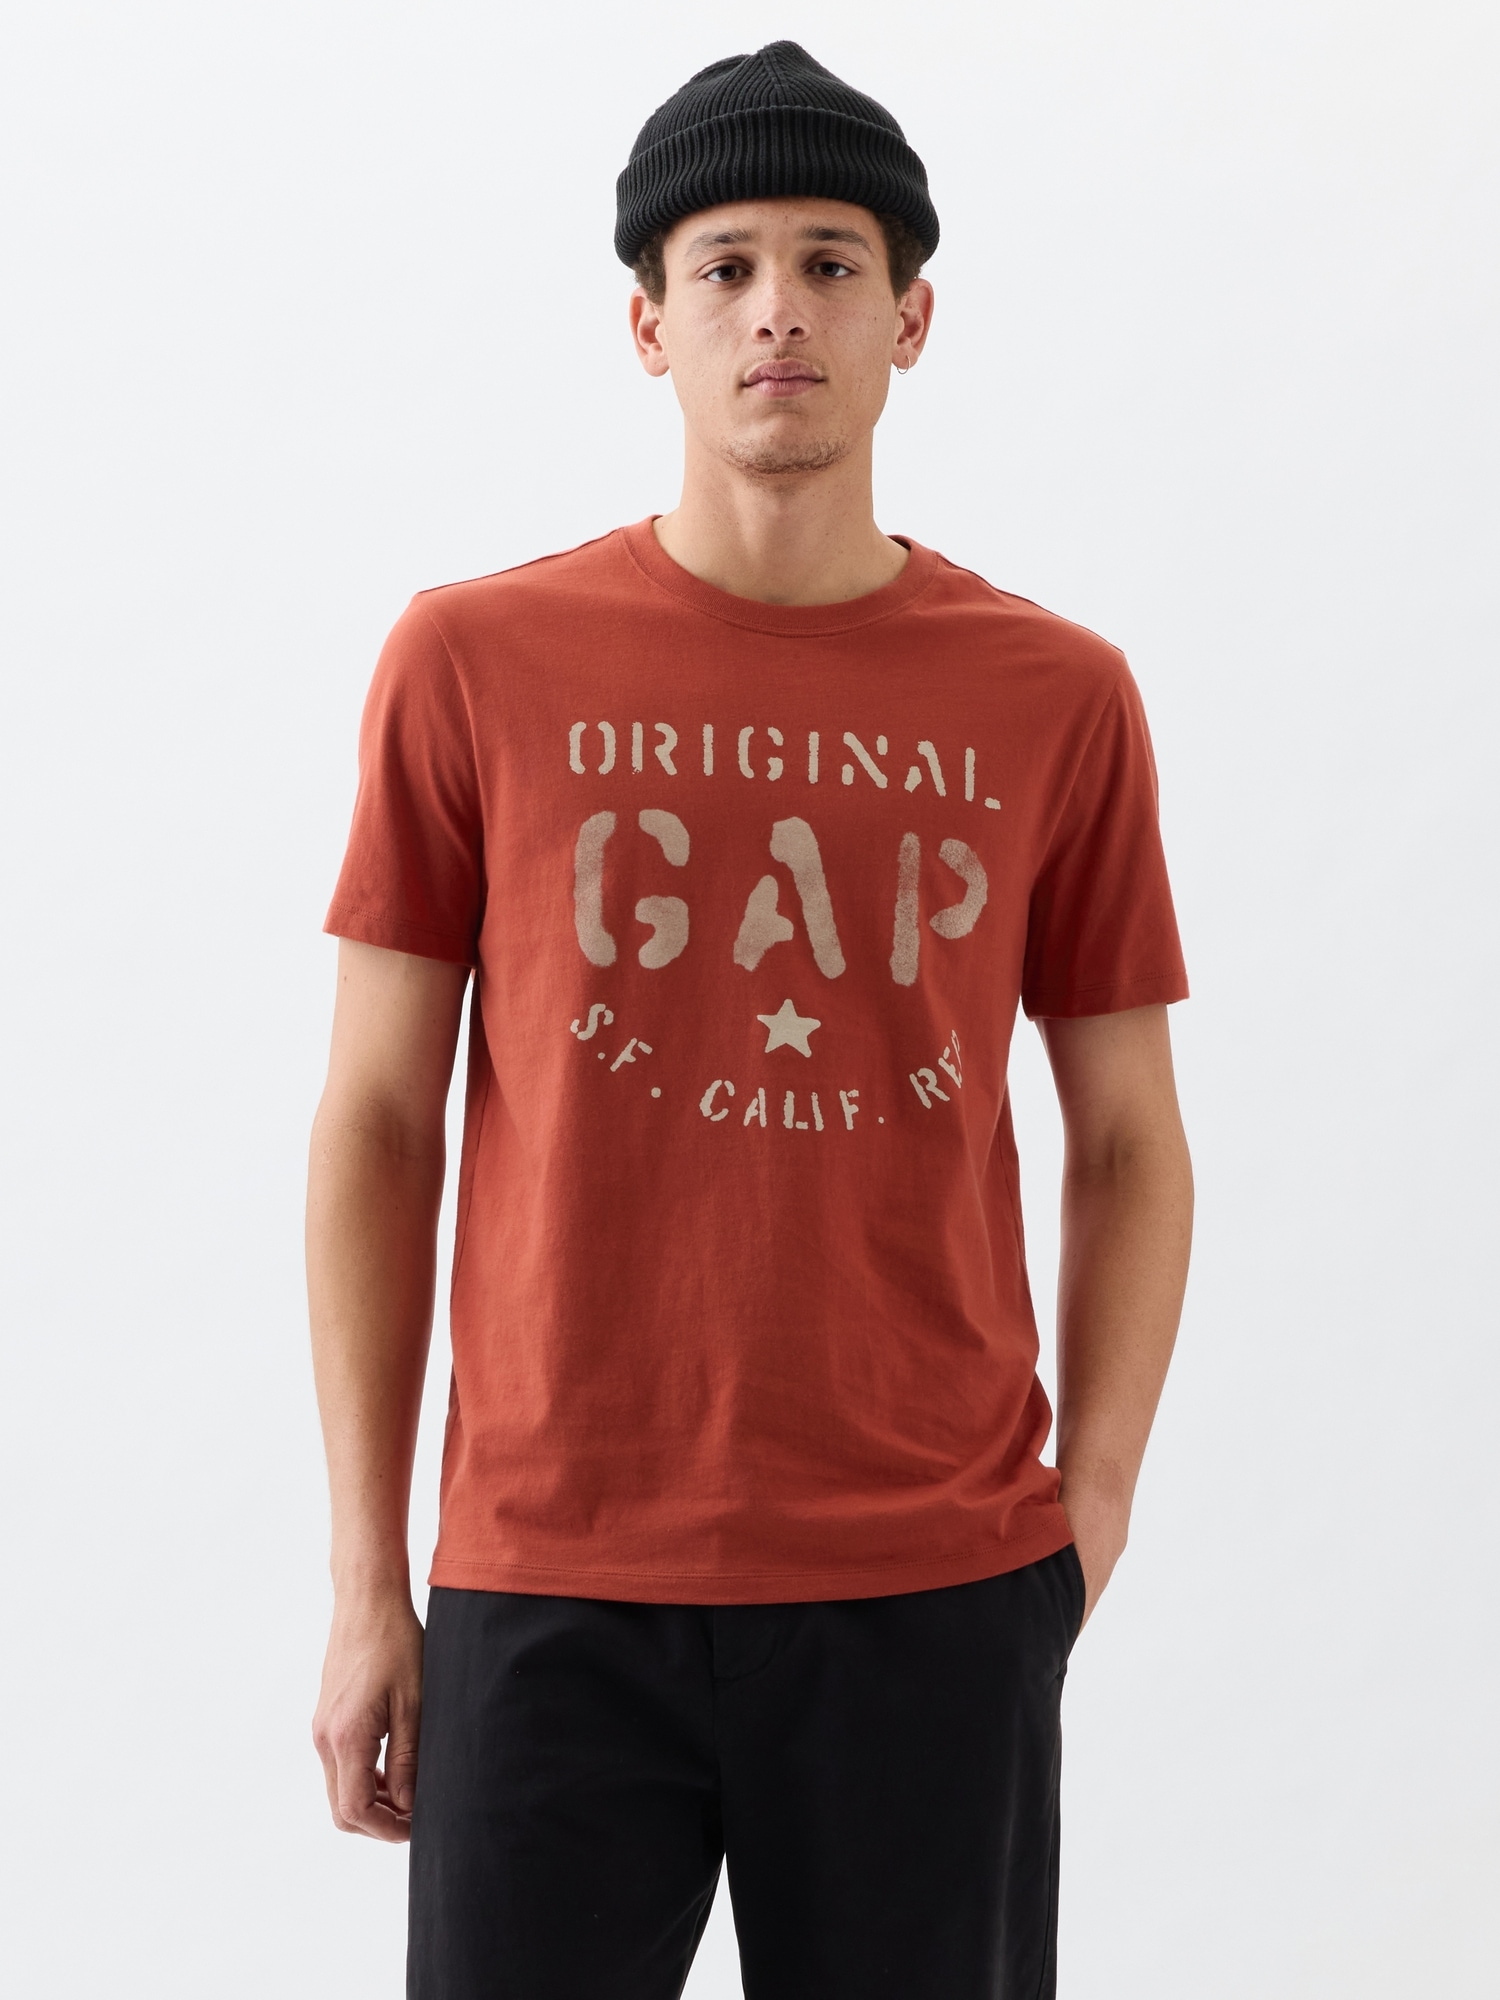 Everyday Soft Gap Graphic T-Shirt